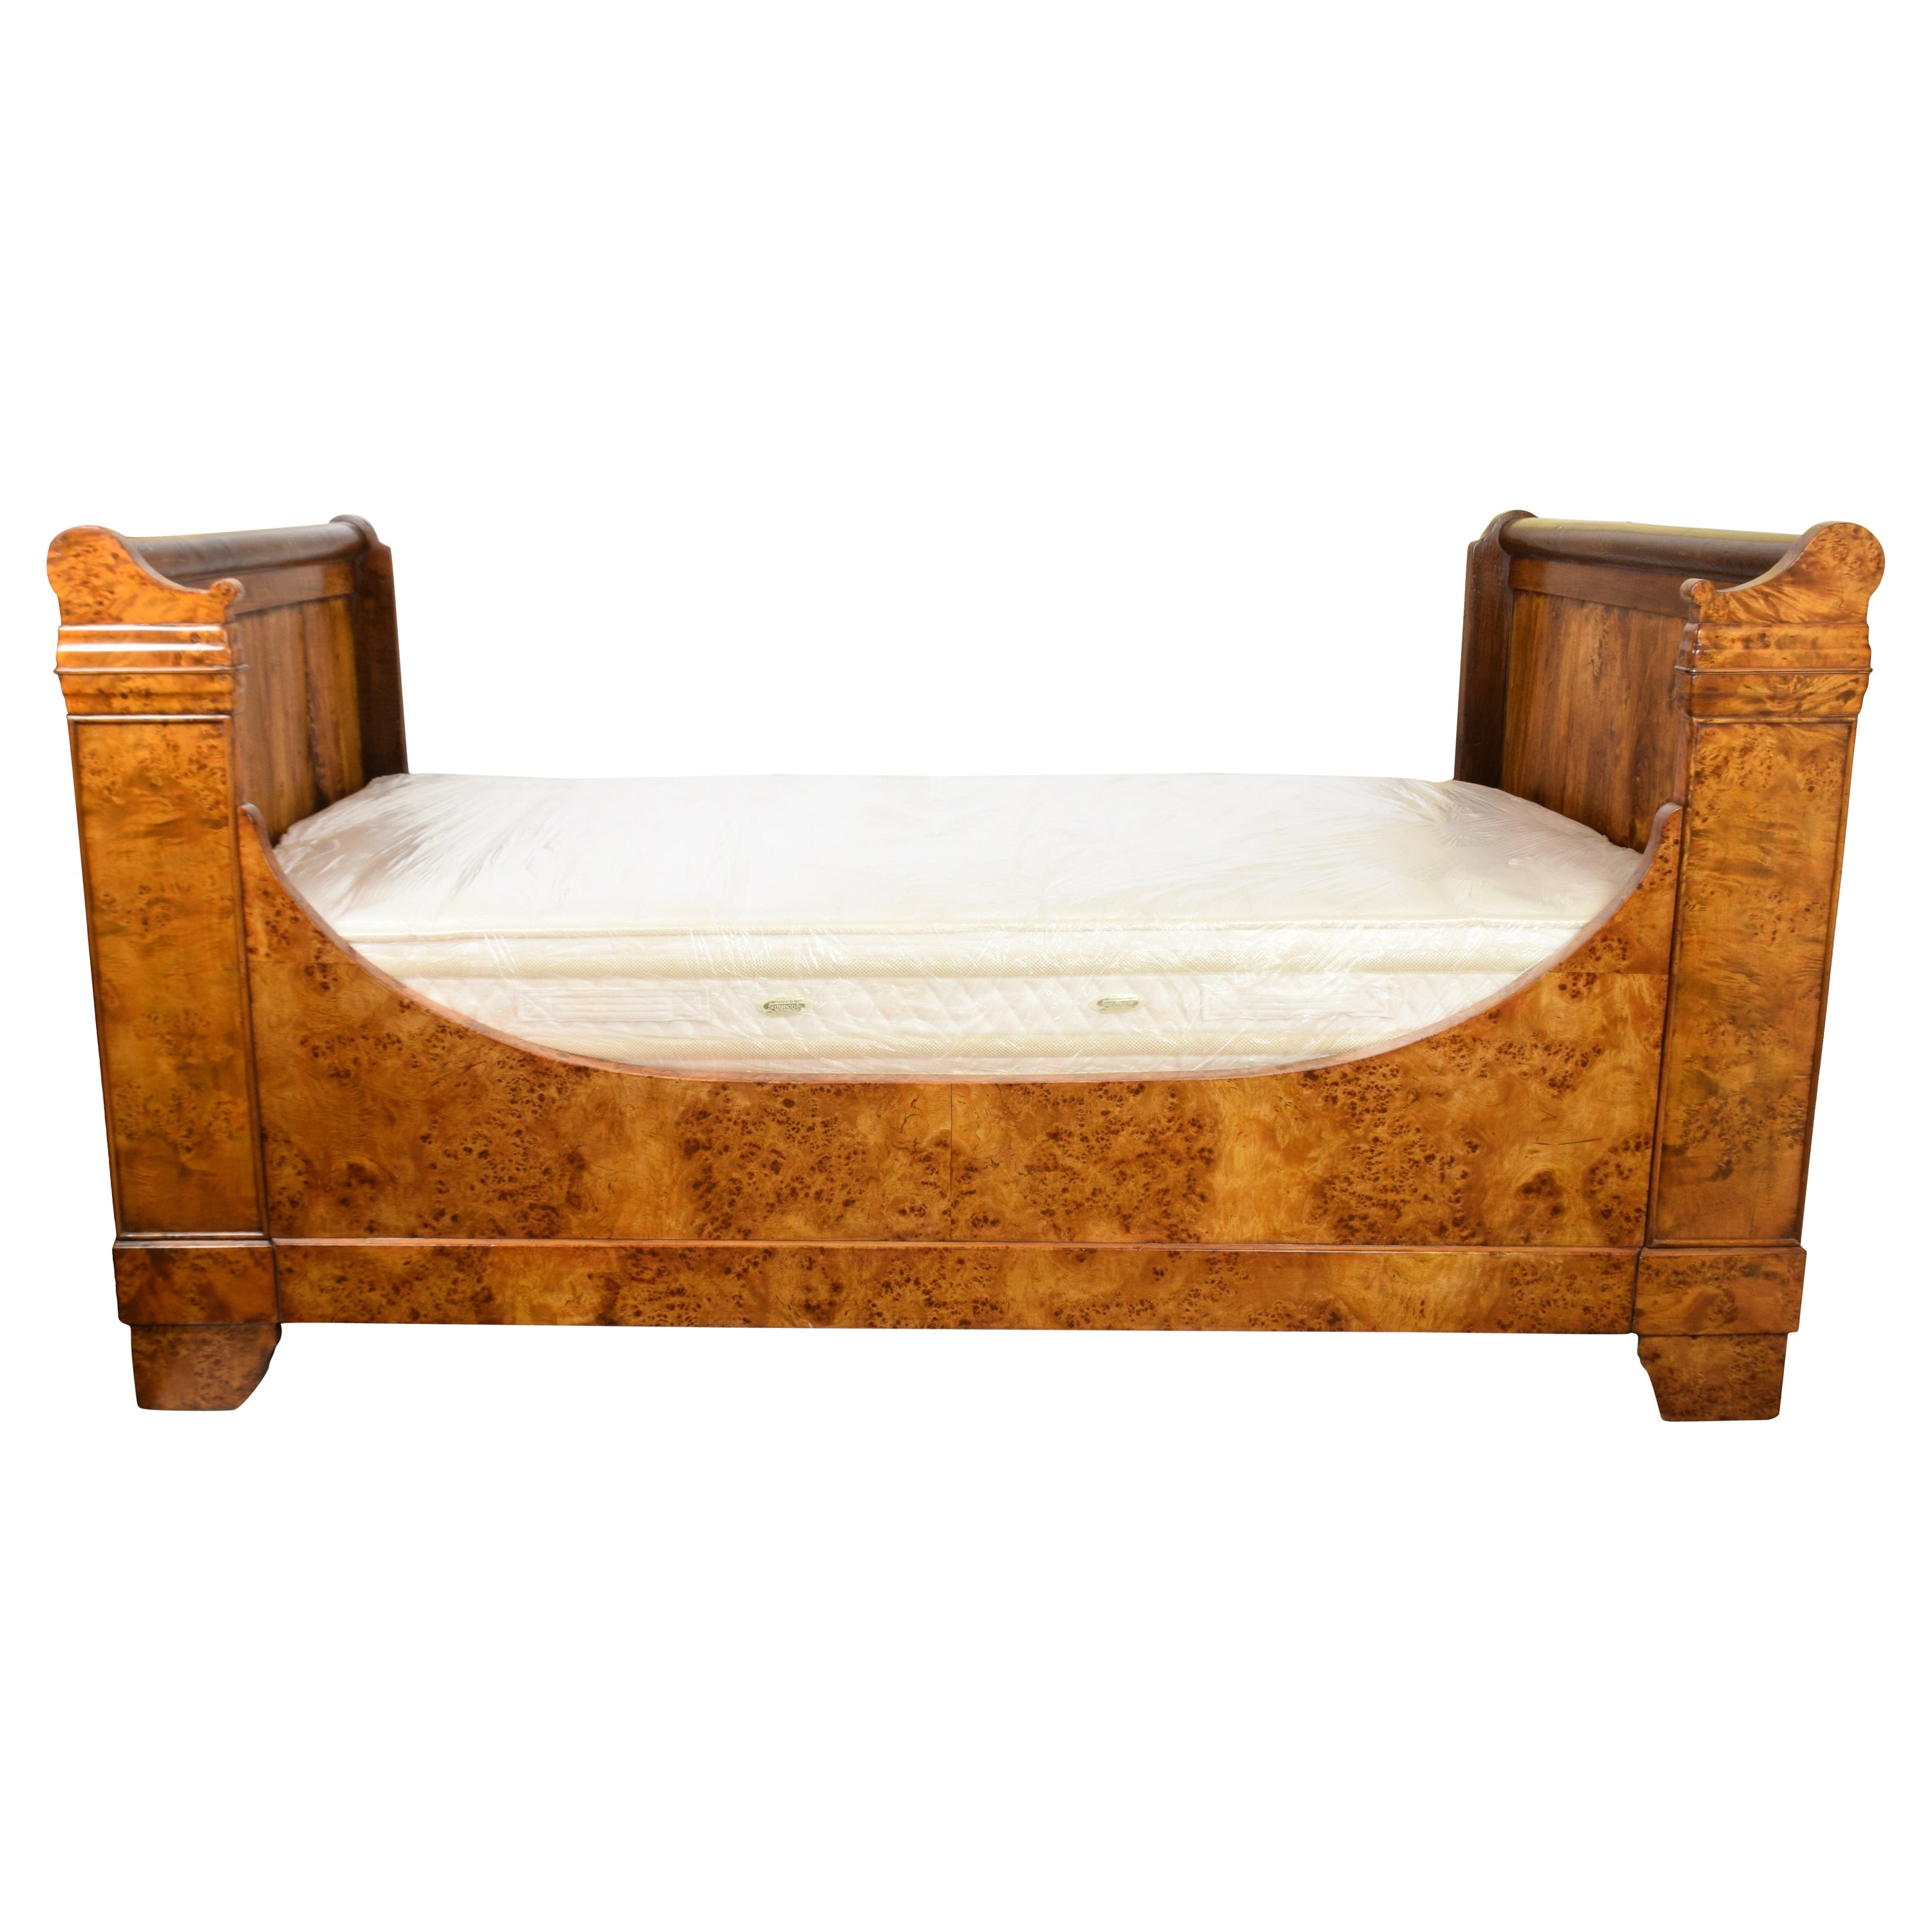 19th Century Poplar Burl Bed, Poplar Bed Frame